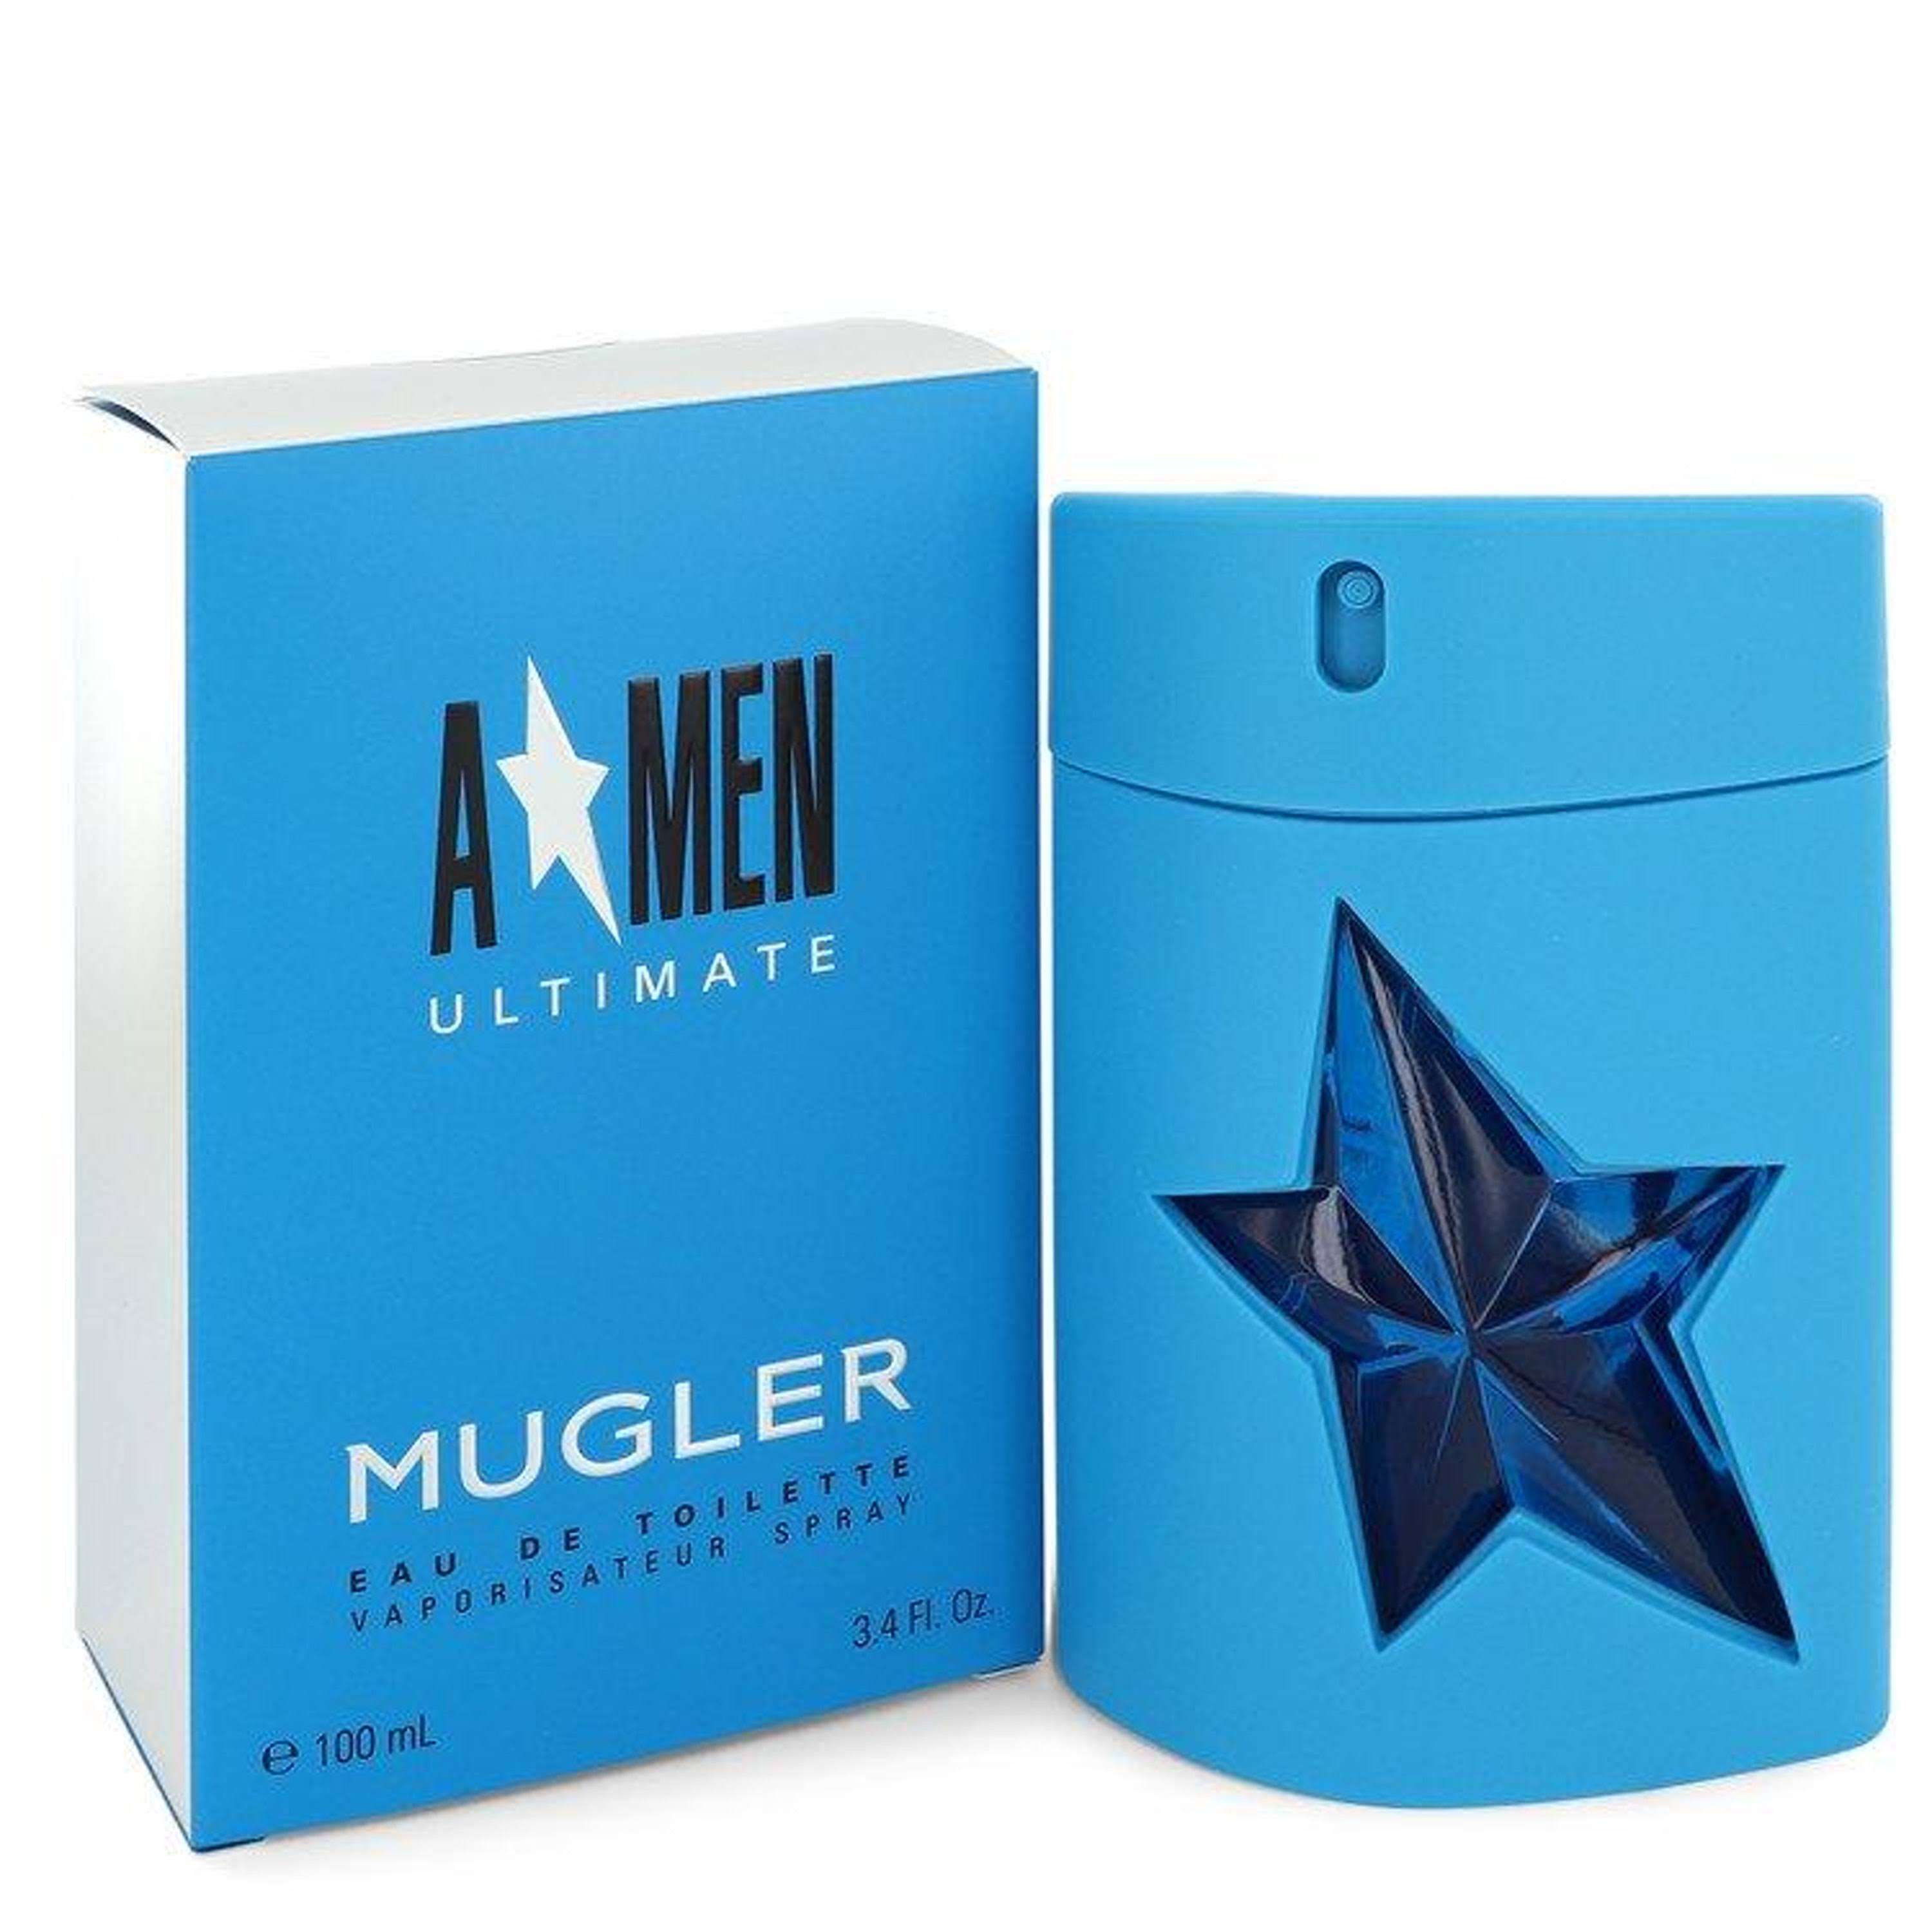 Mugler A Men Ultimate for Men Eau de Toilette - 100ml